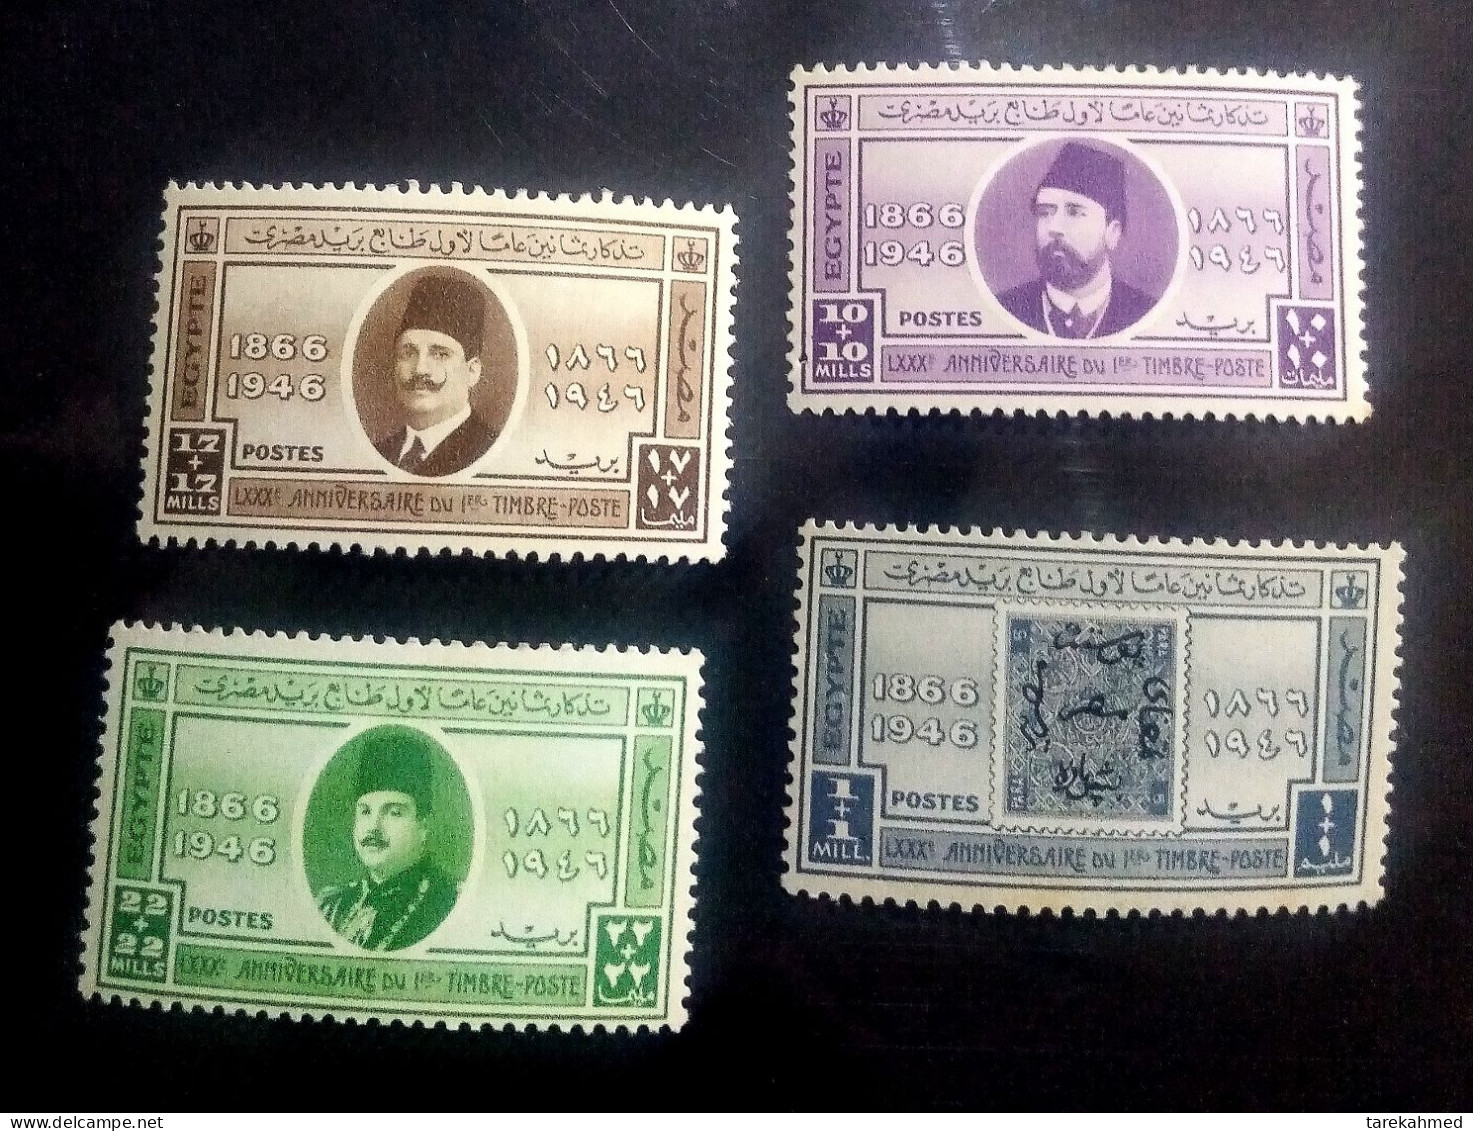 Egypt 1946 - Complete Set Of The 80th Anniv. Of Egypt’s 1st Postage Stamp - MNH, Original Gum. - Nuevos